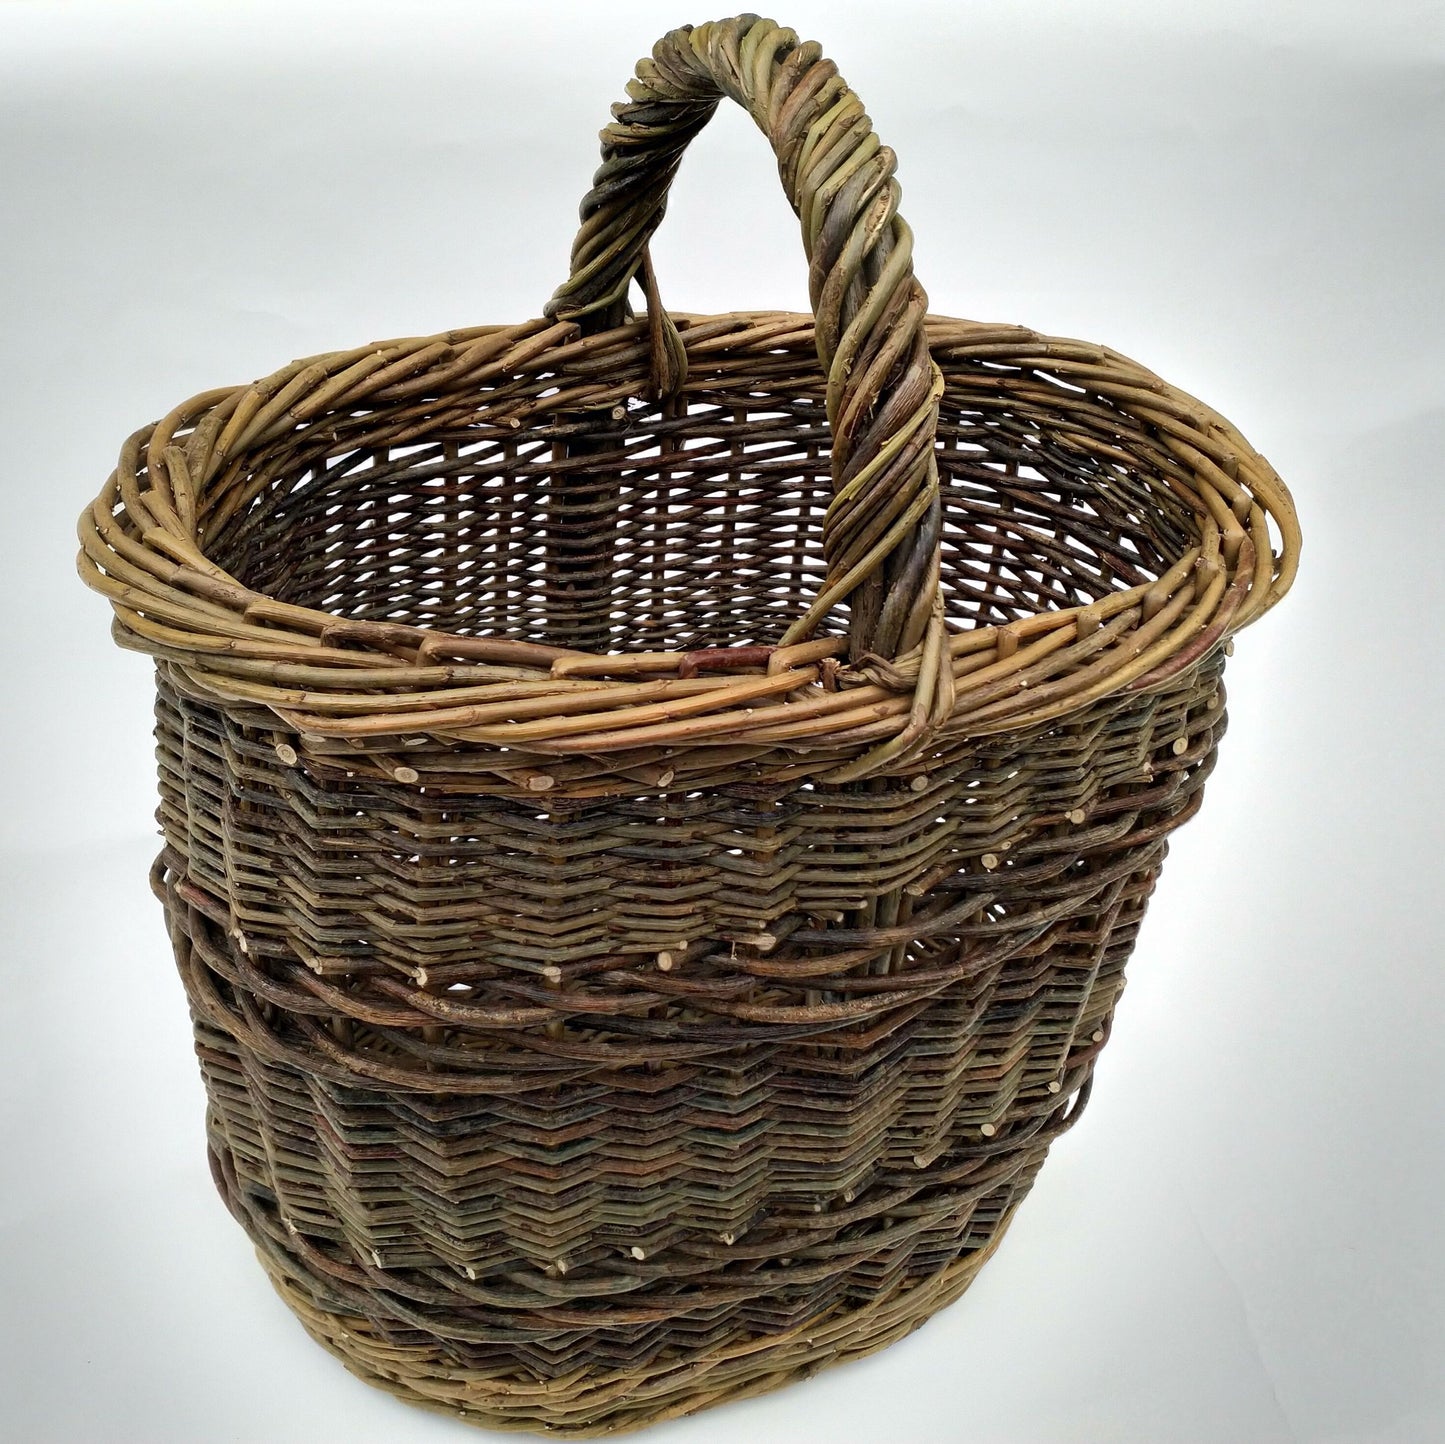 England, Hilary Burns, Basket Weaving